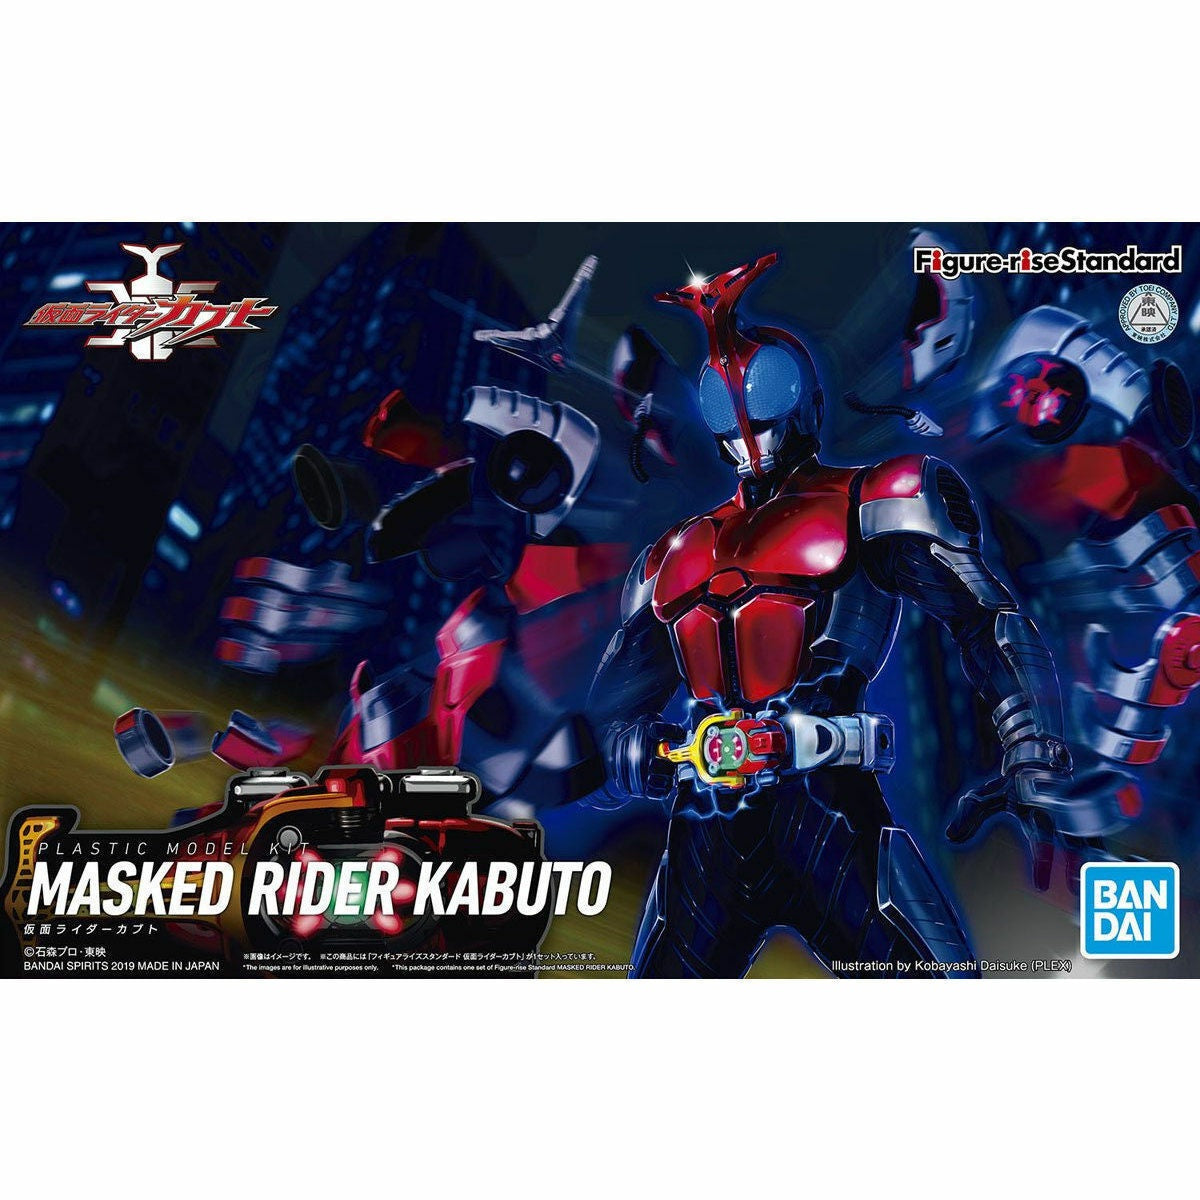 Figure-Rise Standard Masked Rider Kabuto